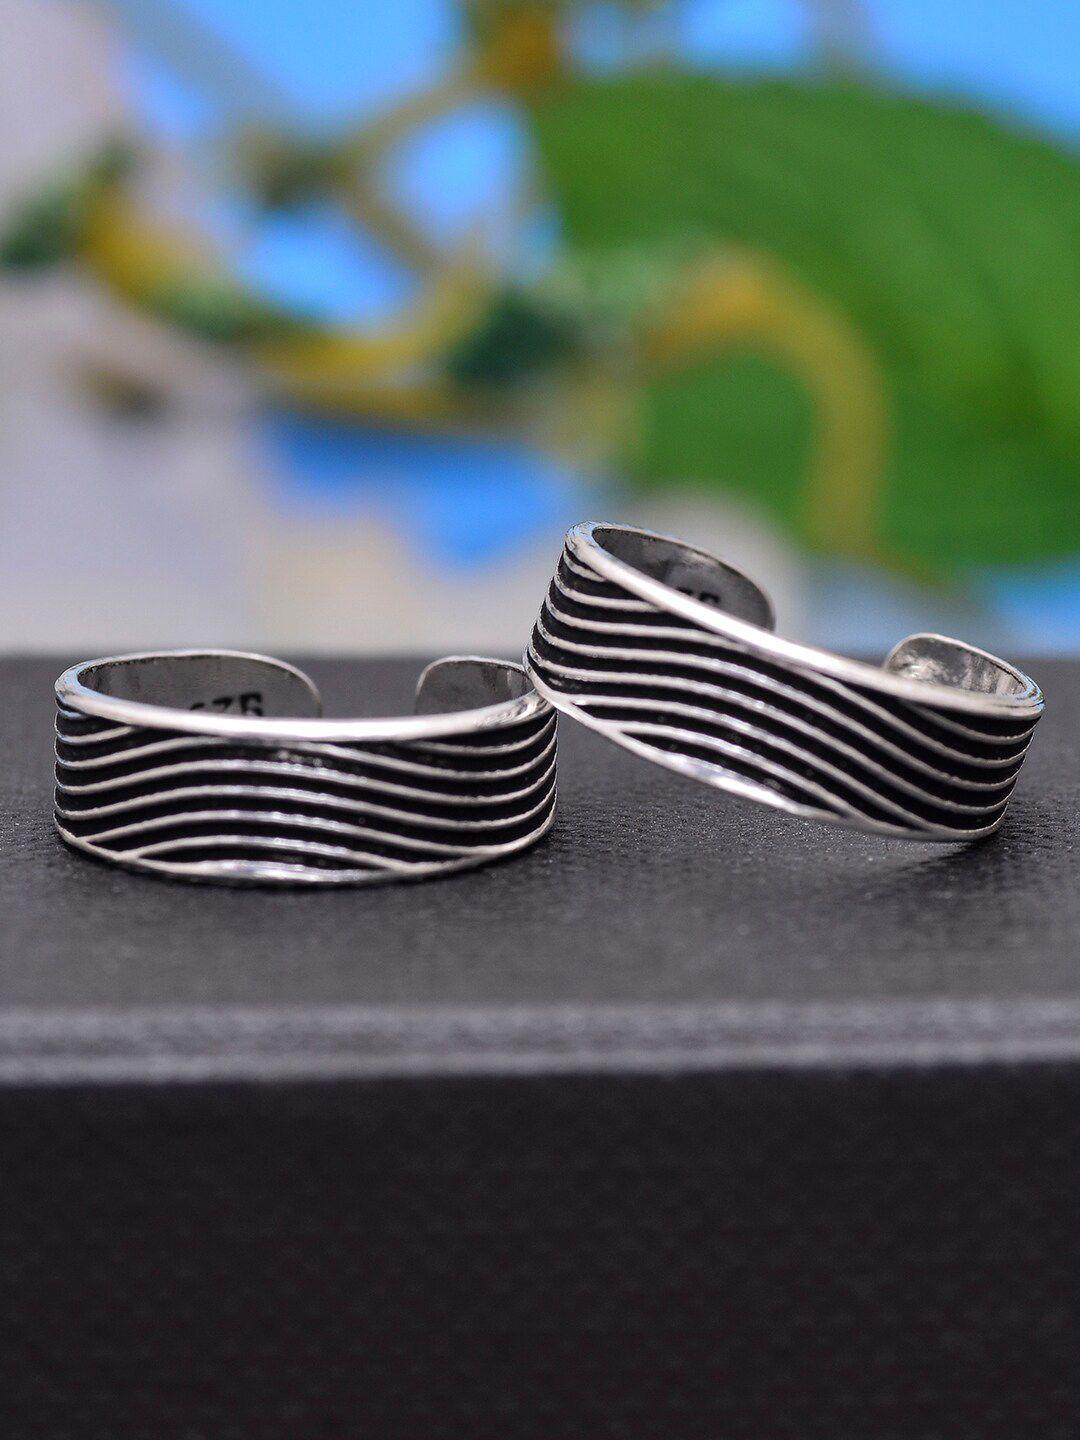 abhooshan-925-sterling-silver-oxidized-adjustable-toe-rings